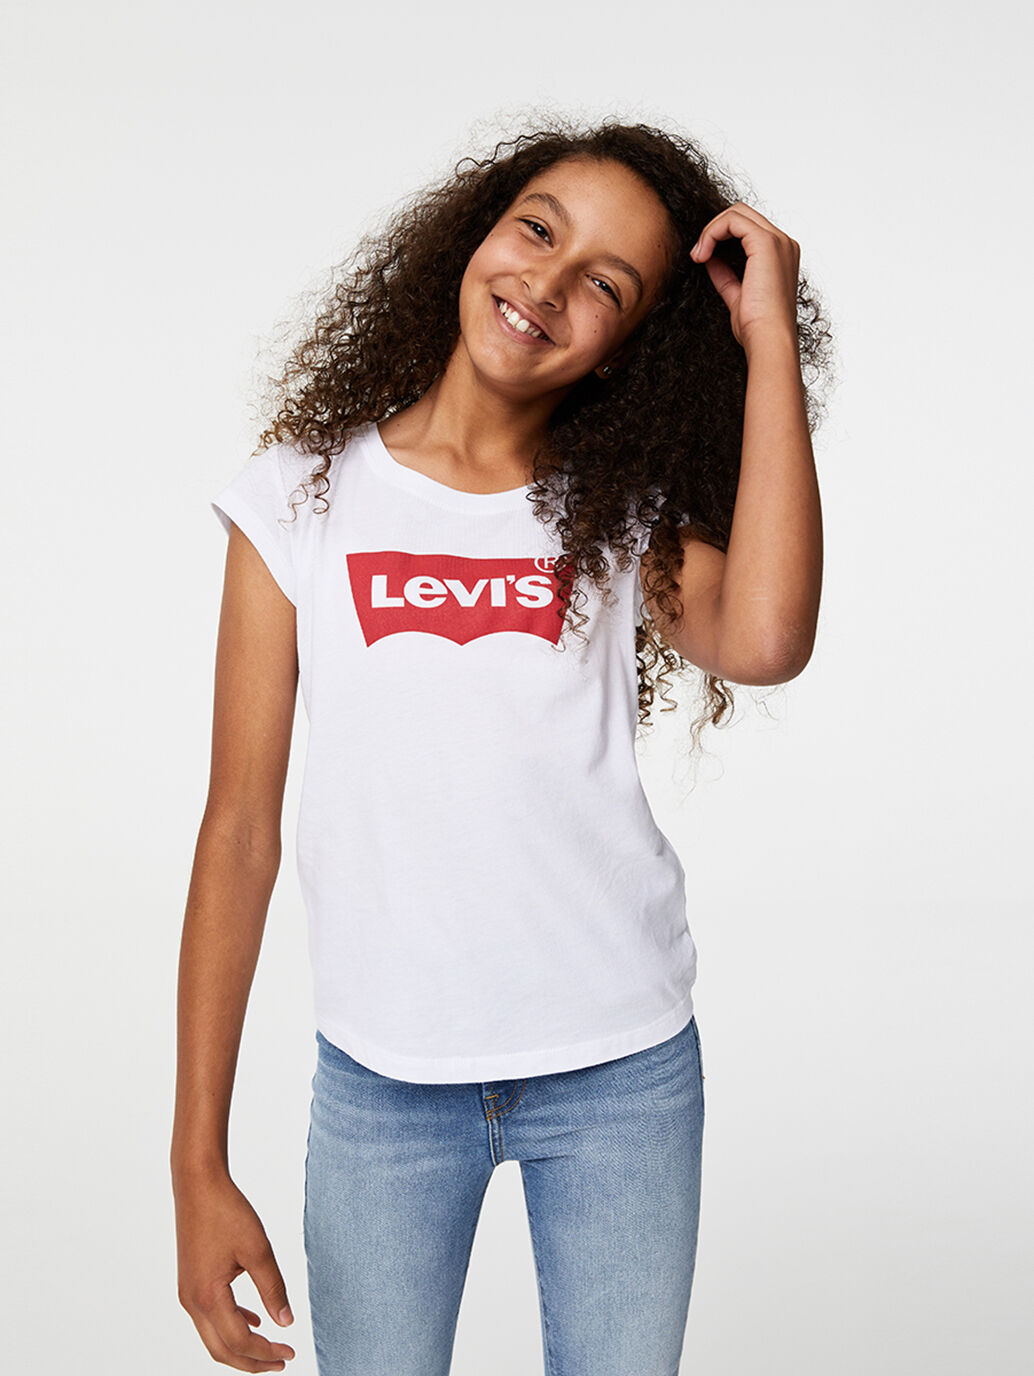 levis shirt for girls